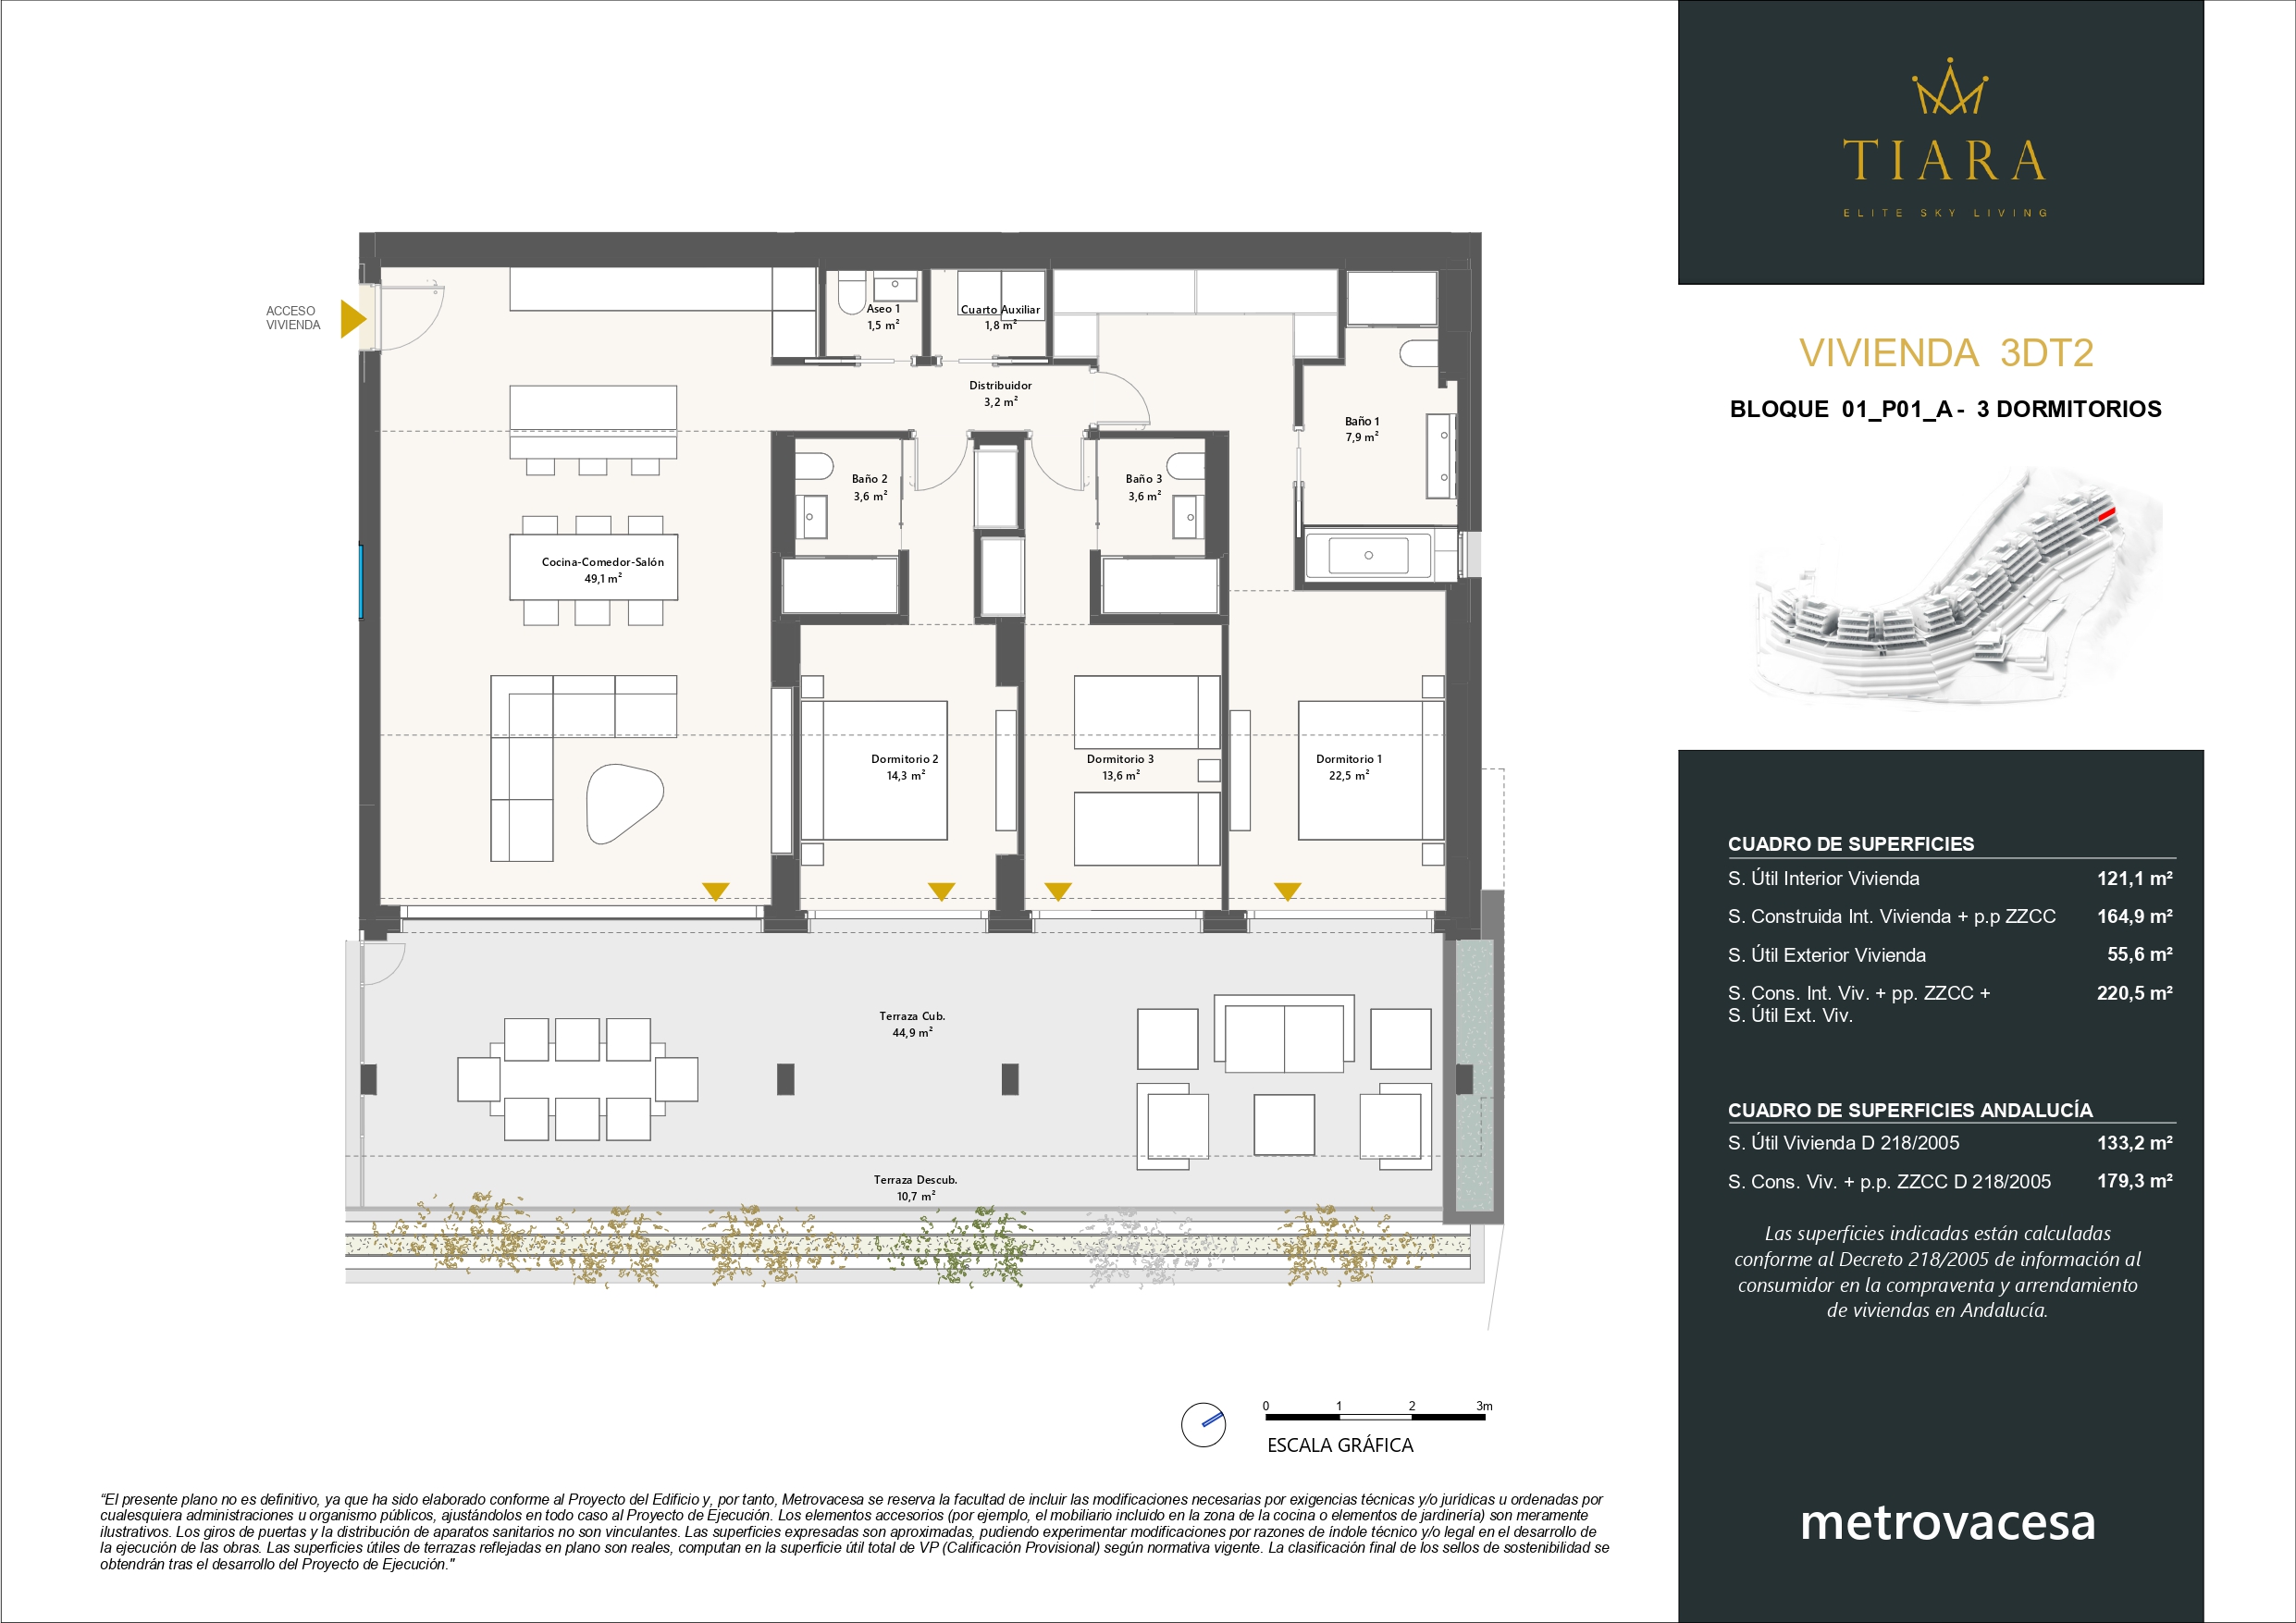 3 bedroom apartment for sale in tiara new development benhavis marbella